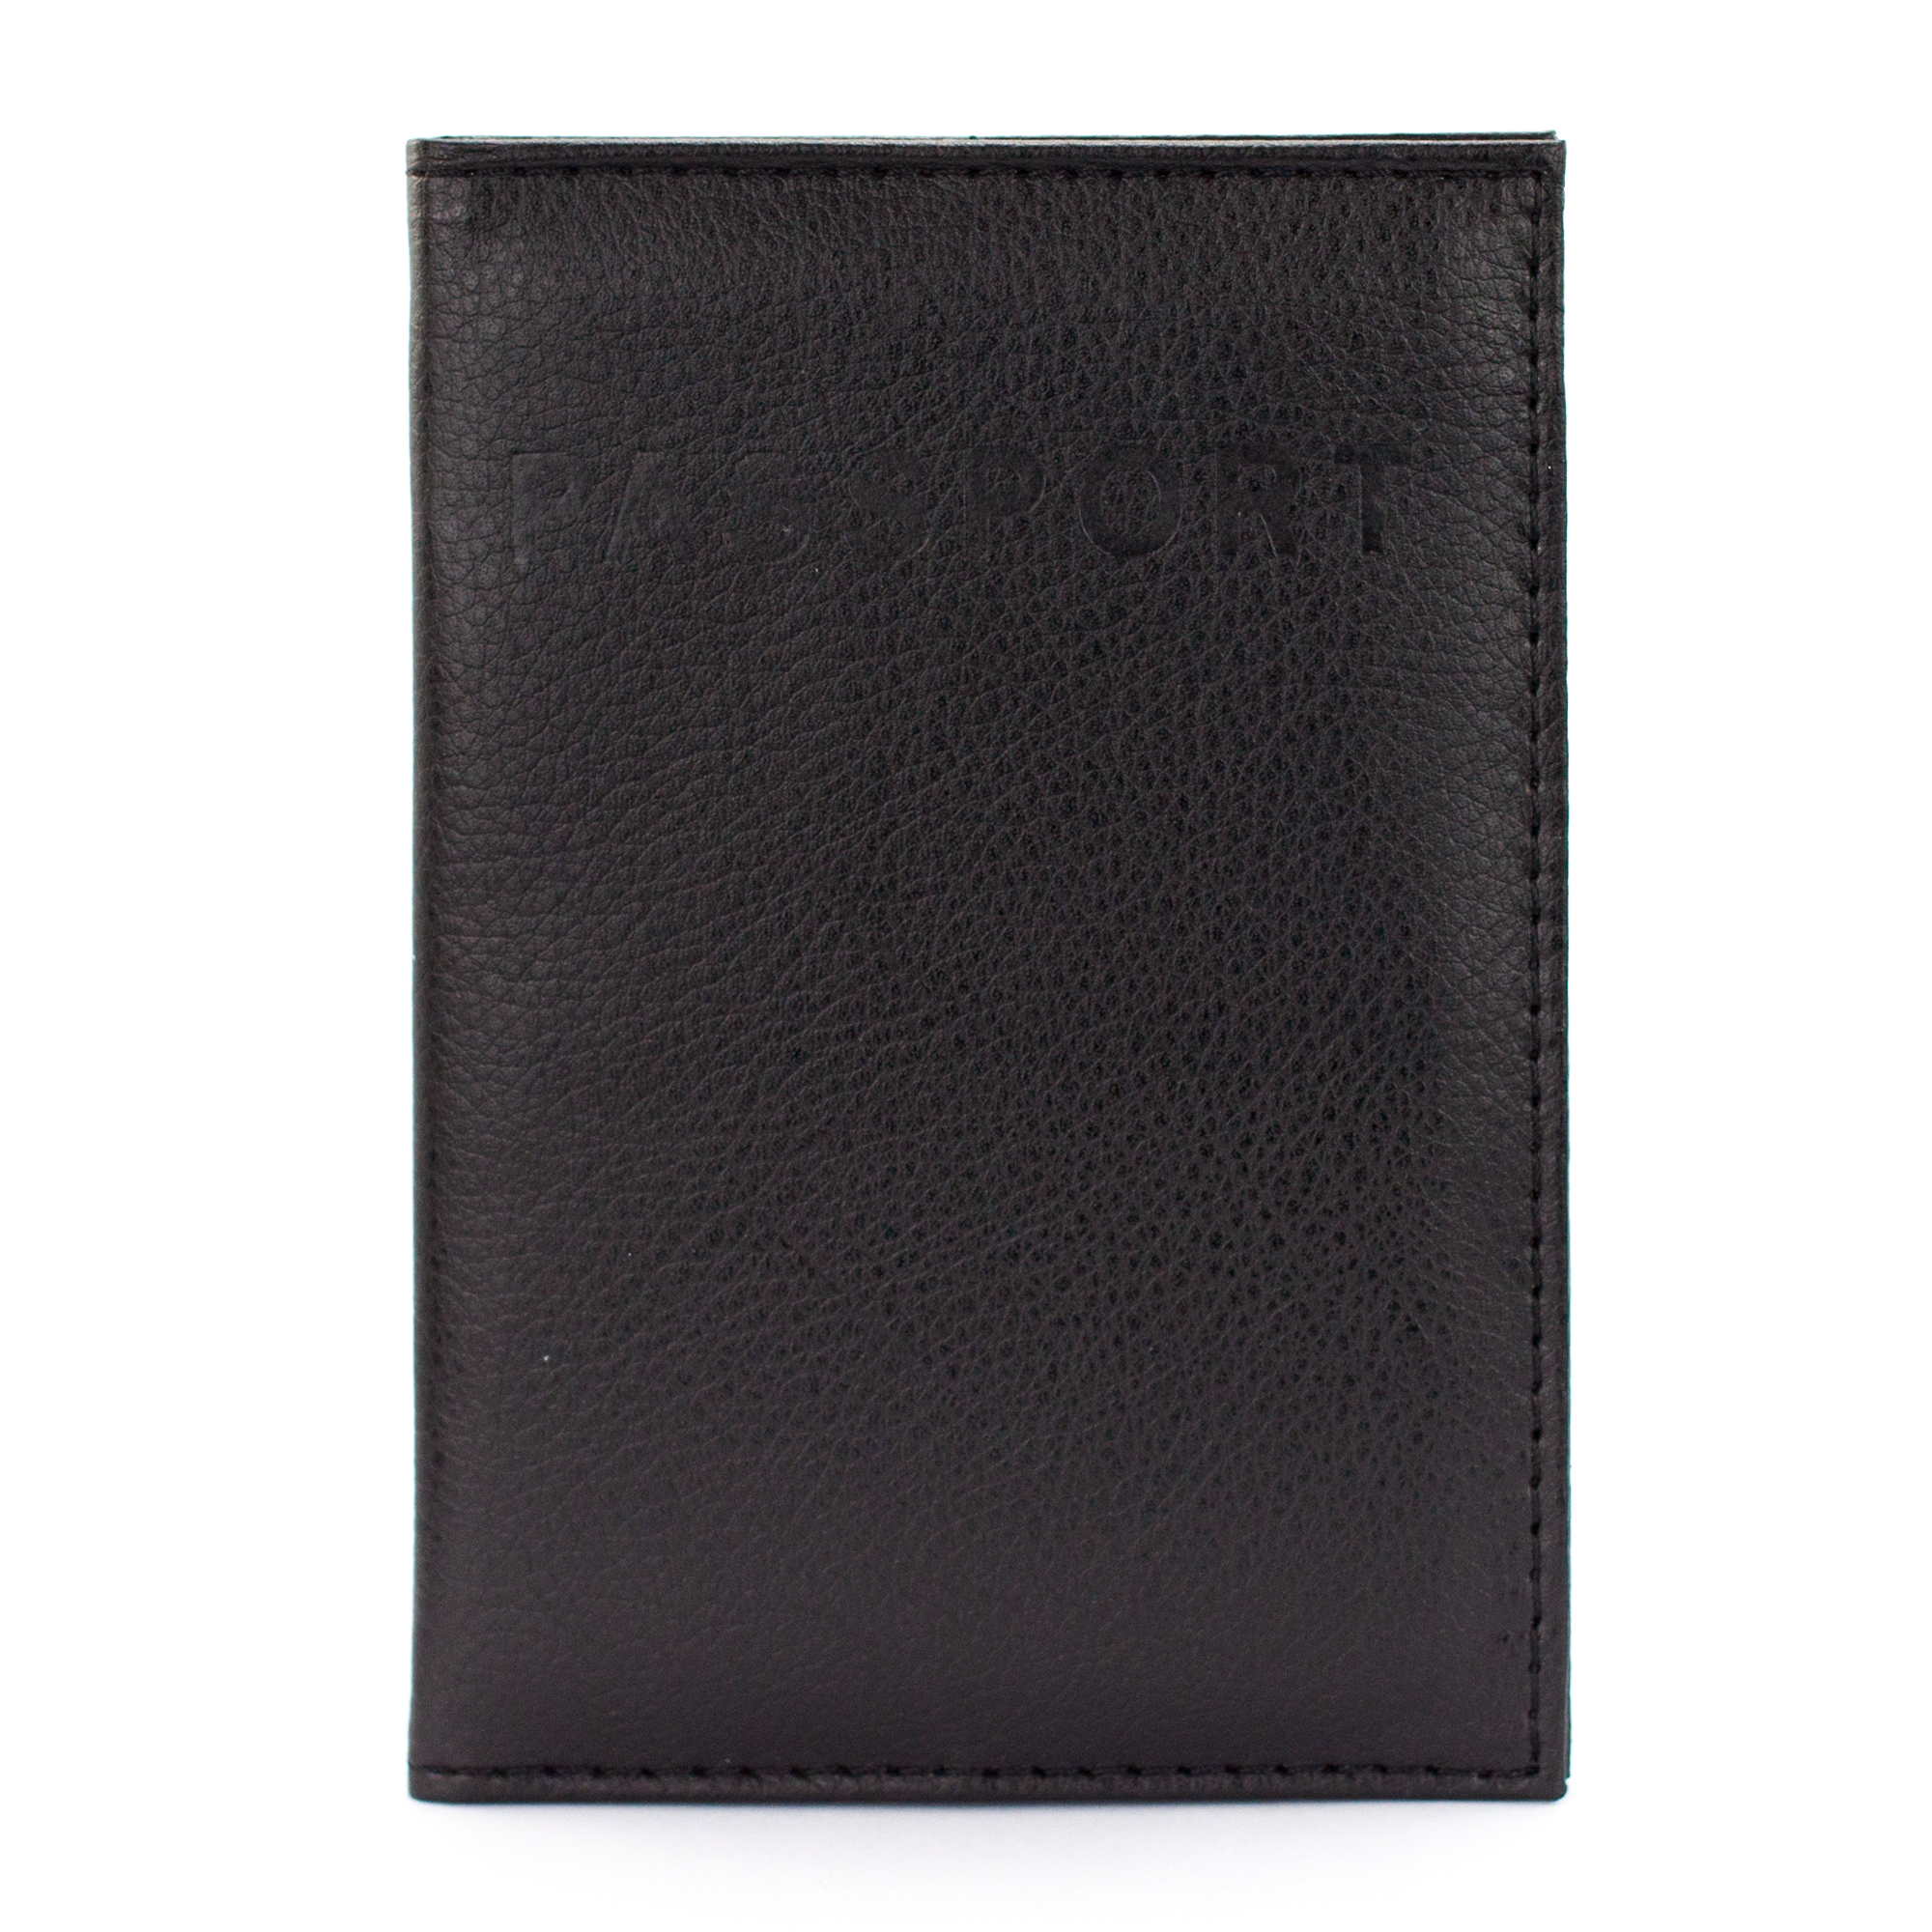 Vegan Leather RFID Blocking Passport Cover, Sturdy, Slim (Black) - image 1 of 4